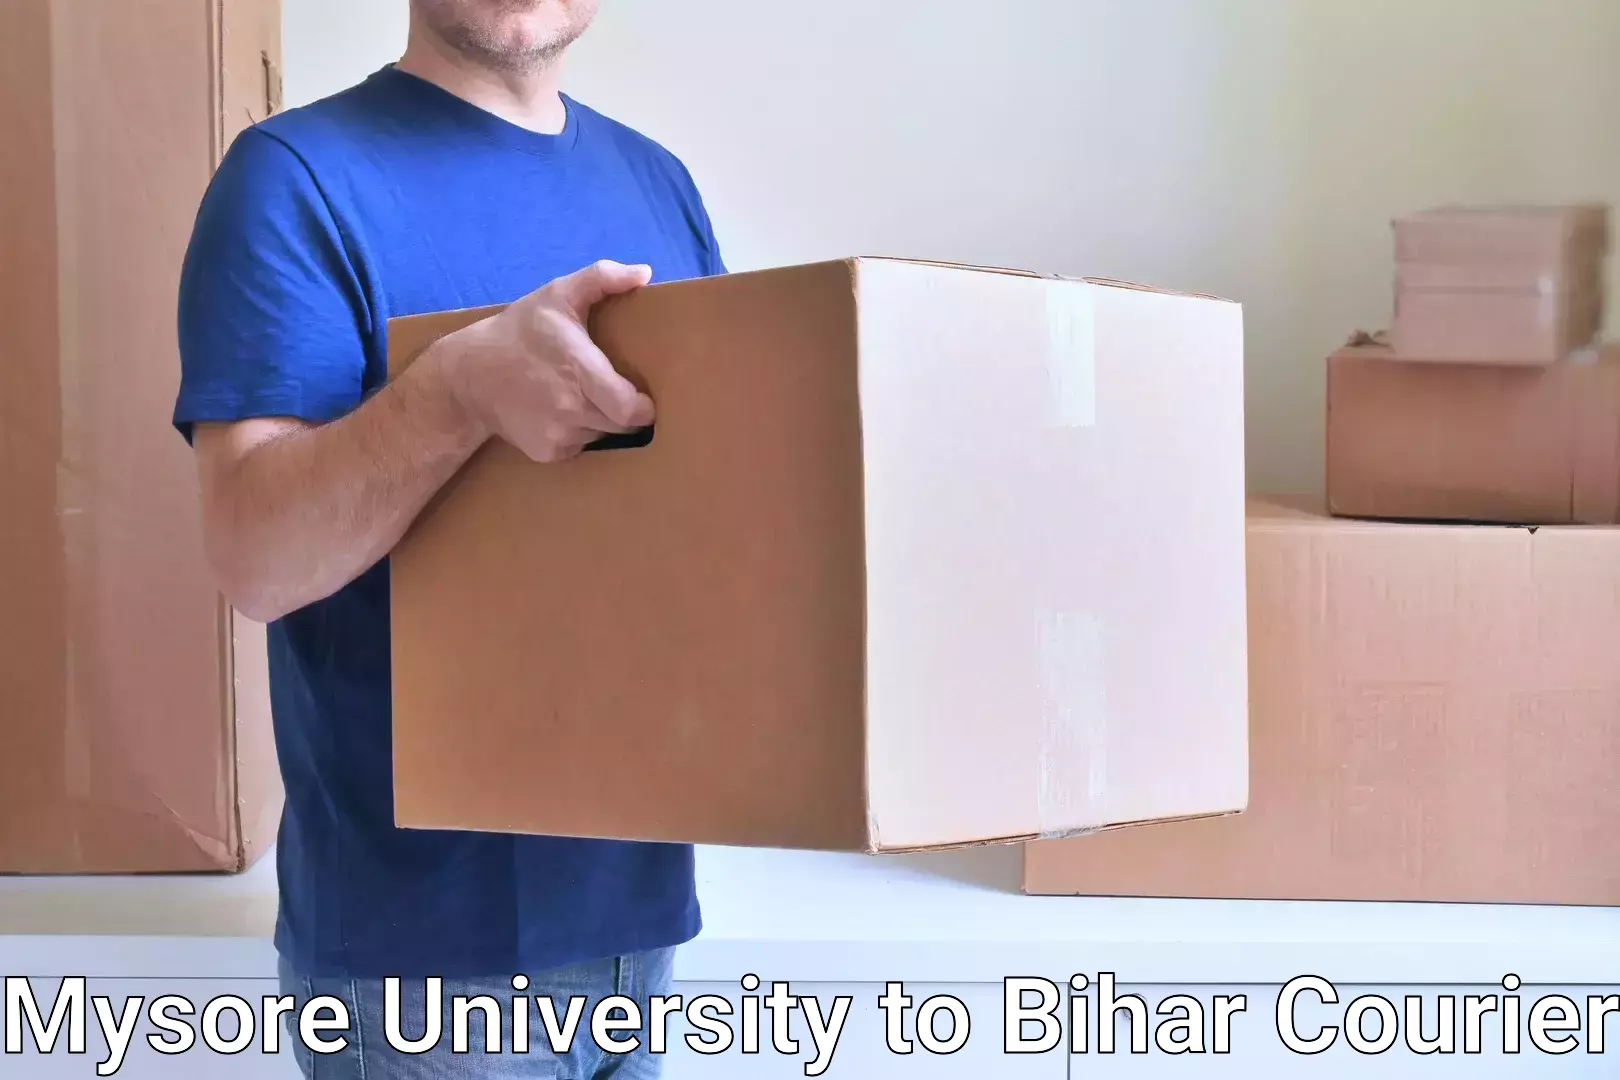 Courier service booking Mysore University to Bihar Sharif